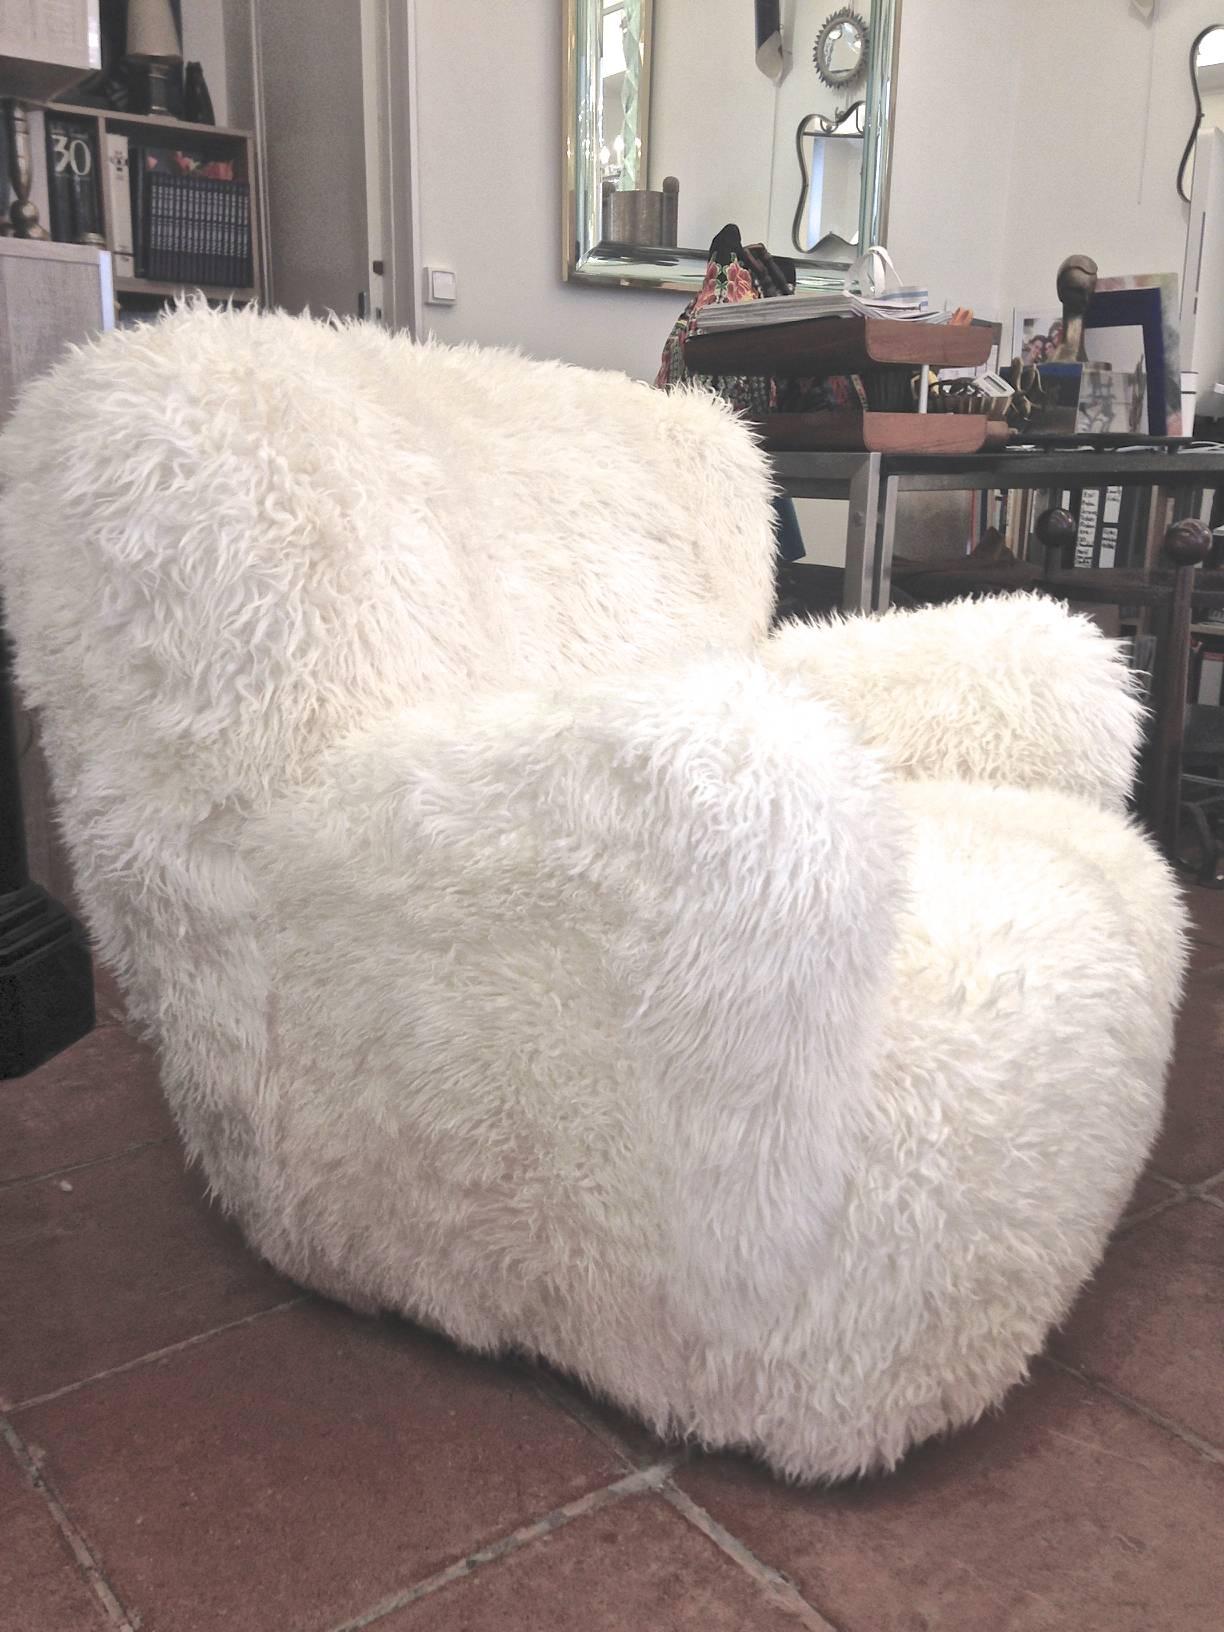 Viggo Boesen pair of hairy club chairs covered in sheep skin fur.